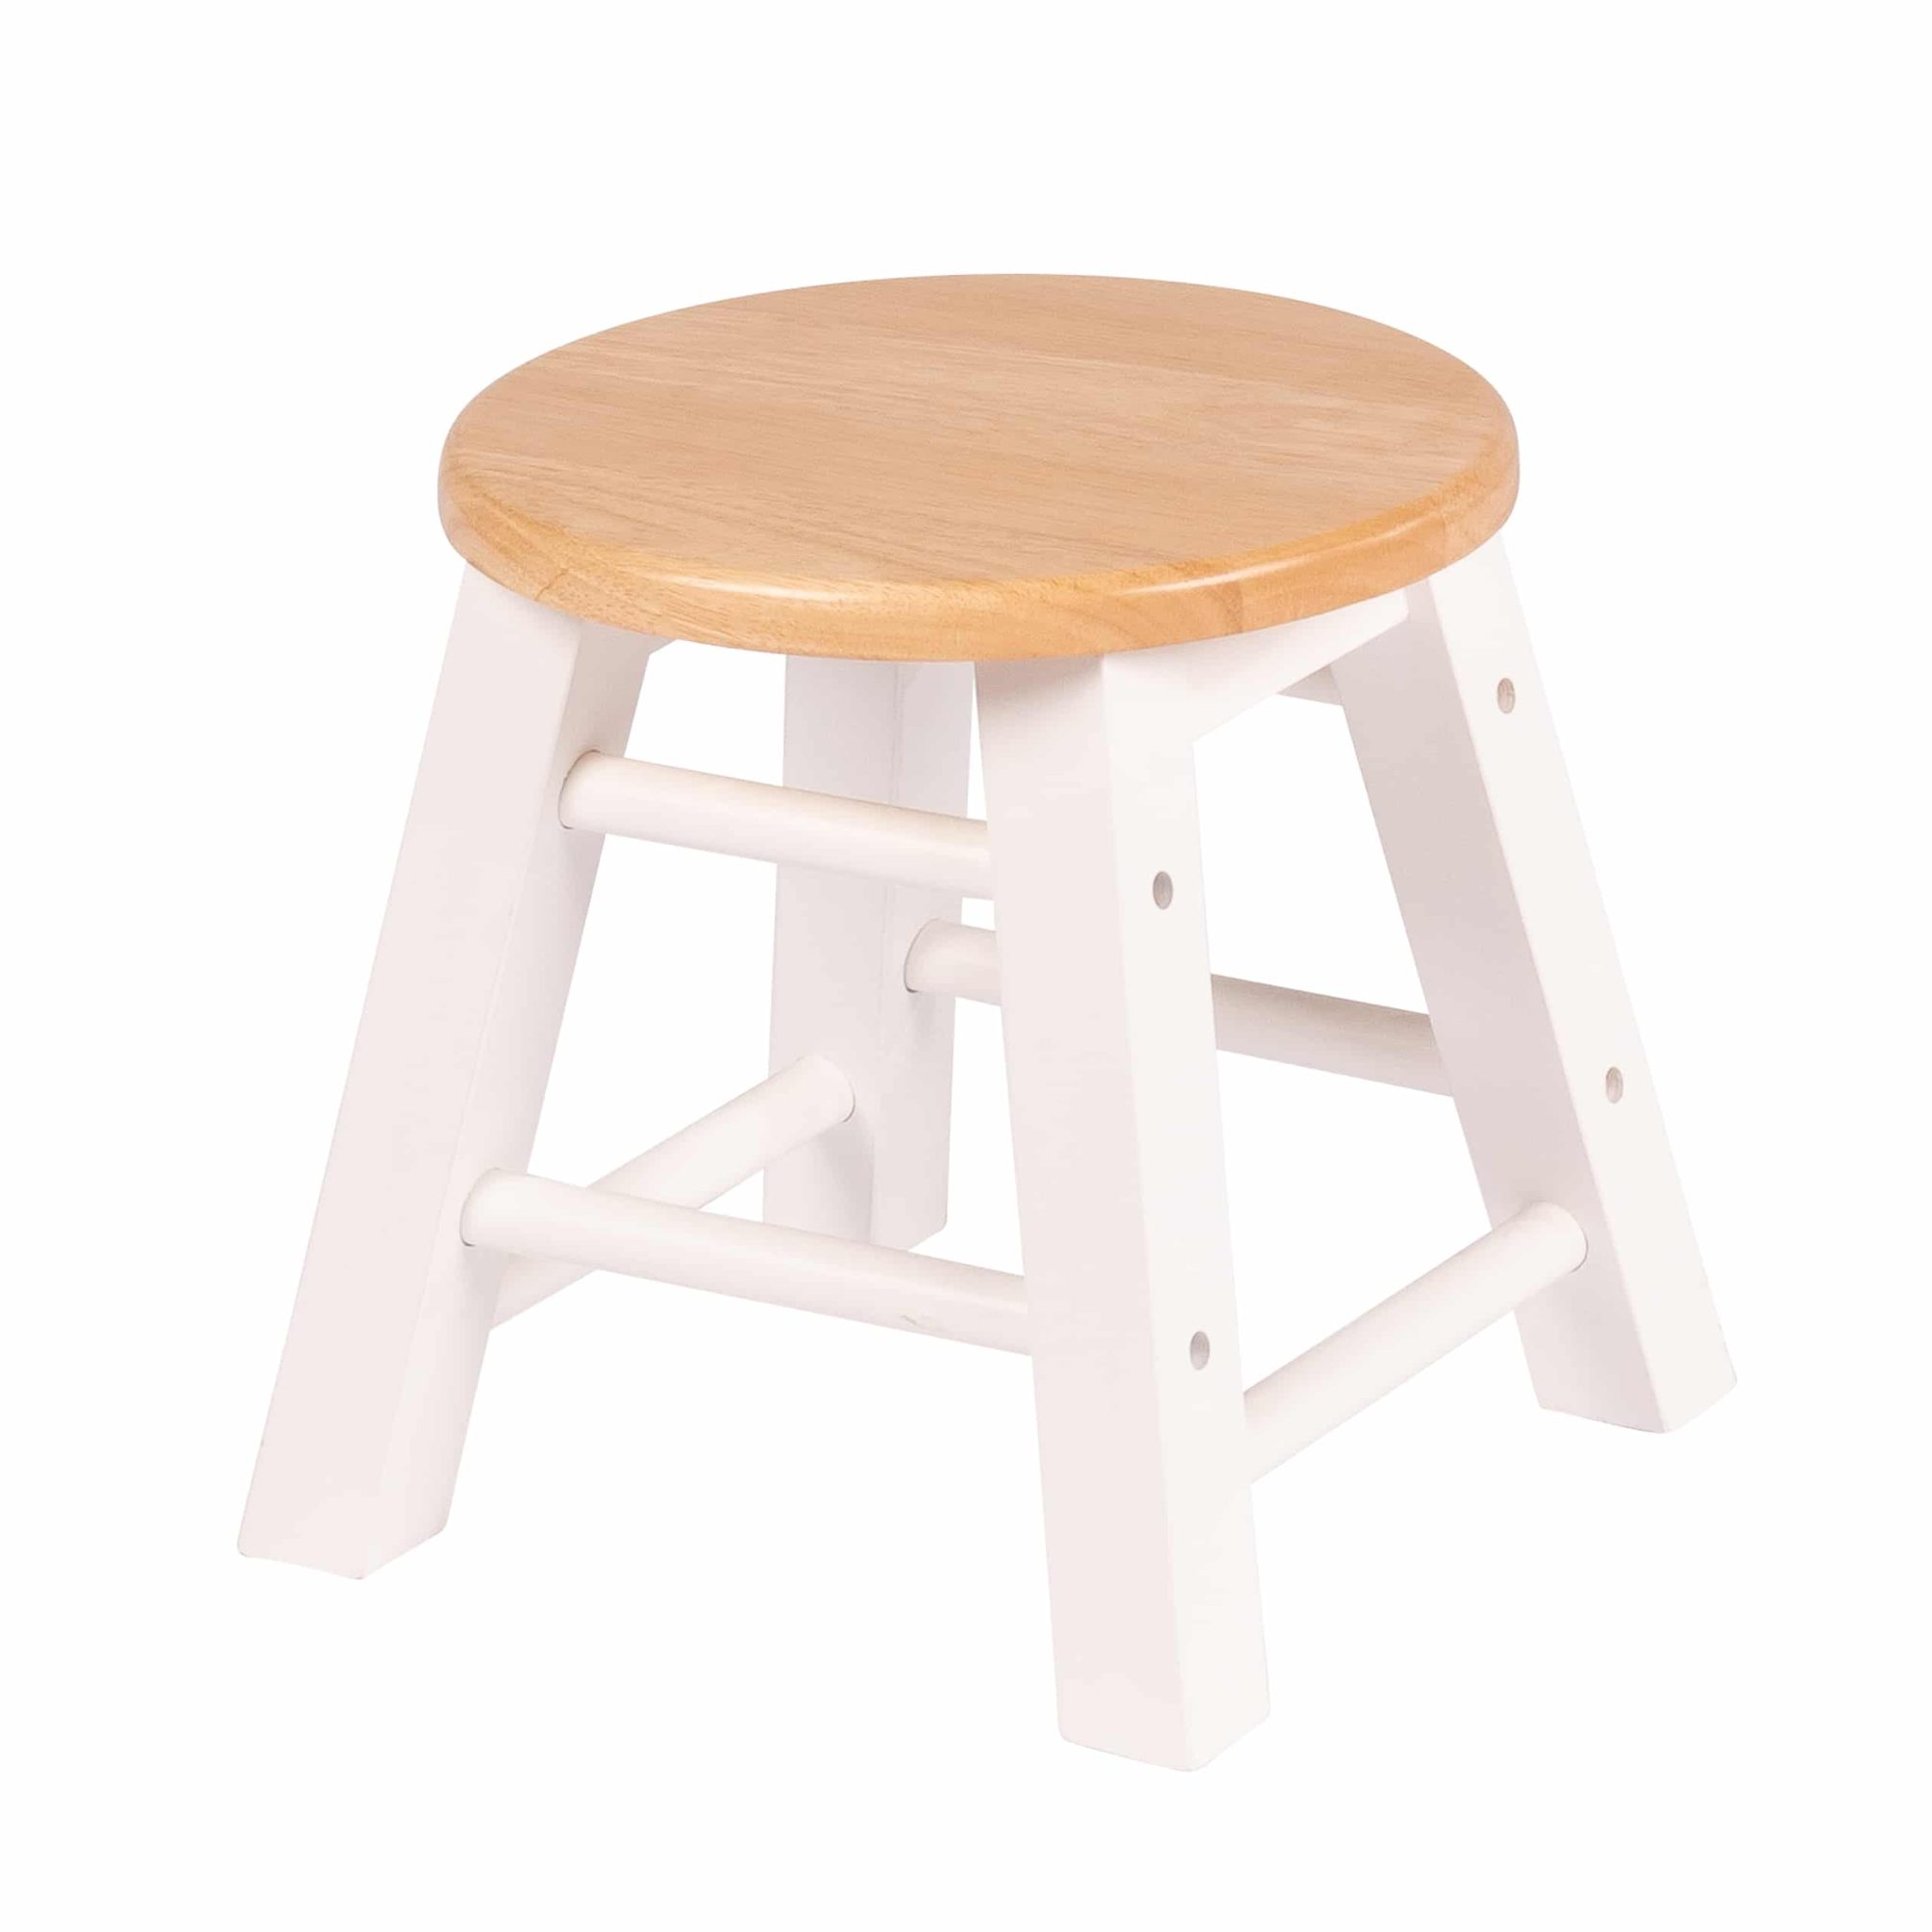 Kids stool, wooden childrens stool, stool for kids, kids seat